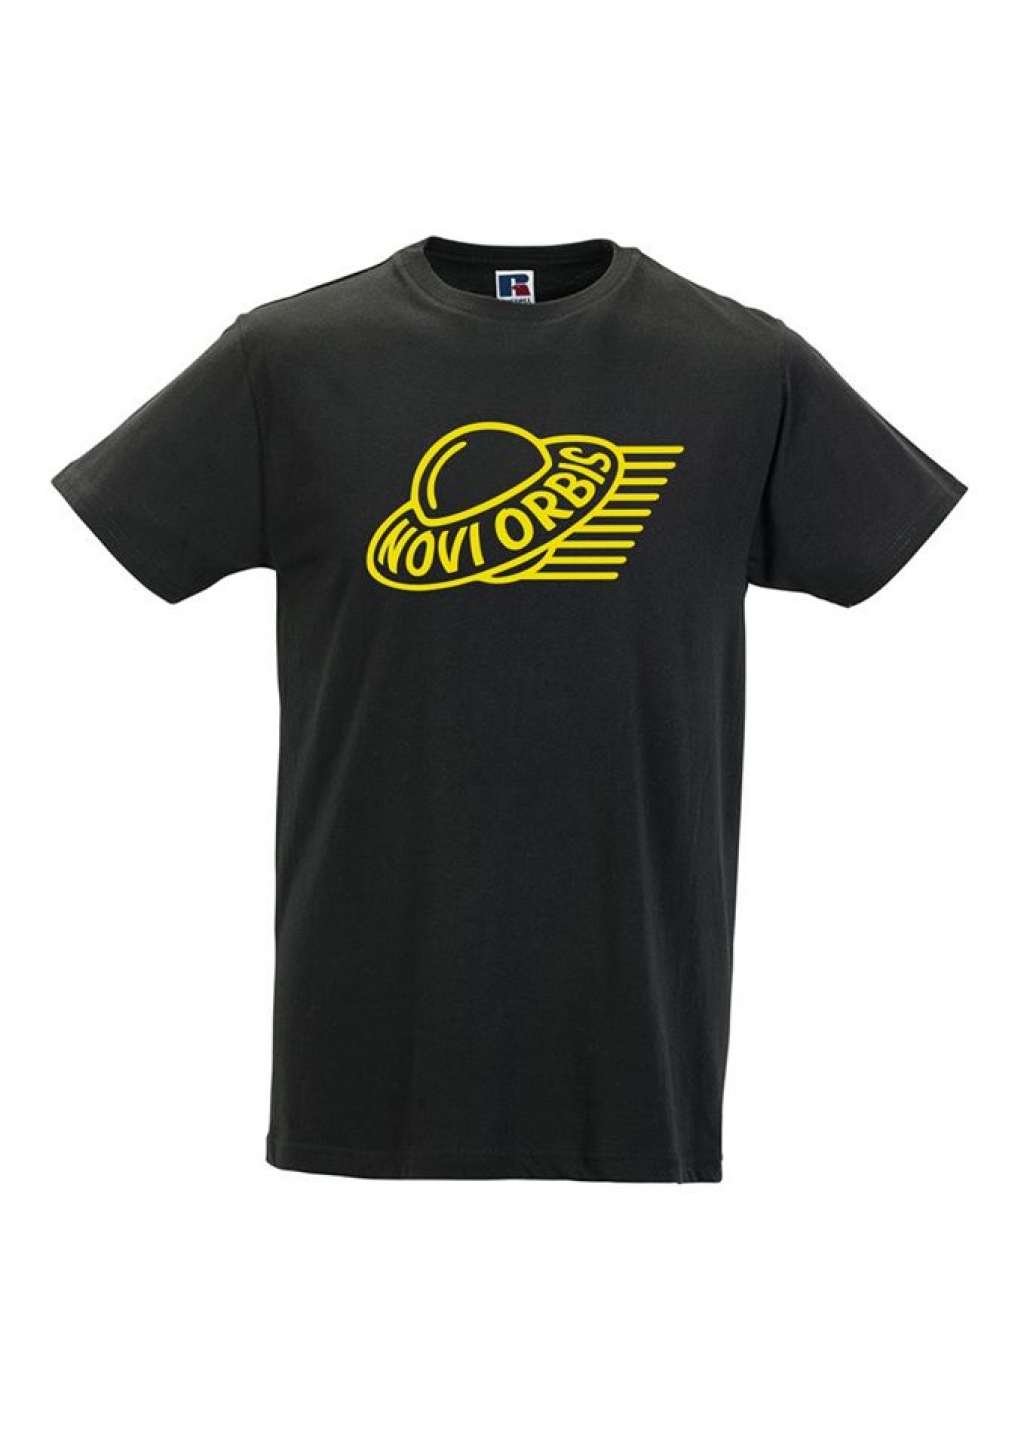 T-Shirt Novi Orbis - Size L / RJ155M black with yellow stamp